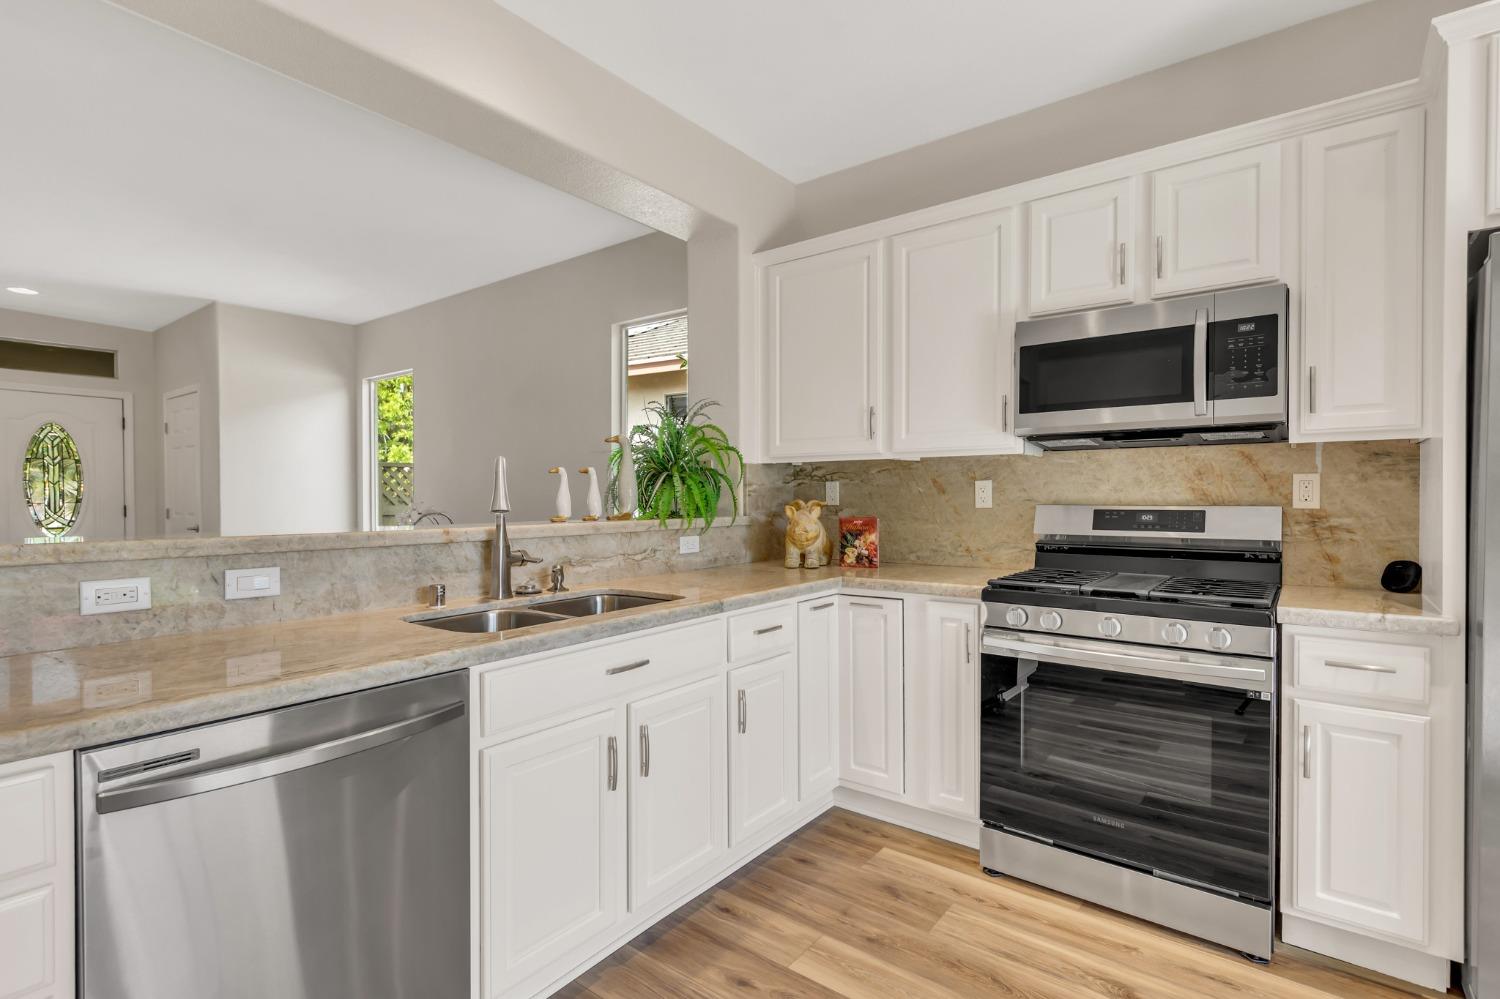 Kitchen with Stainless Steel appliances & quartzite counter tops & backsplash